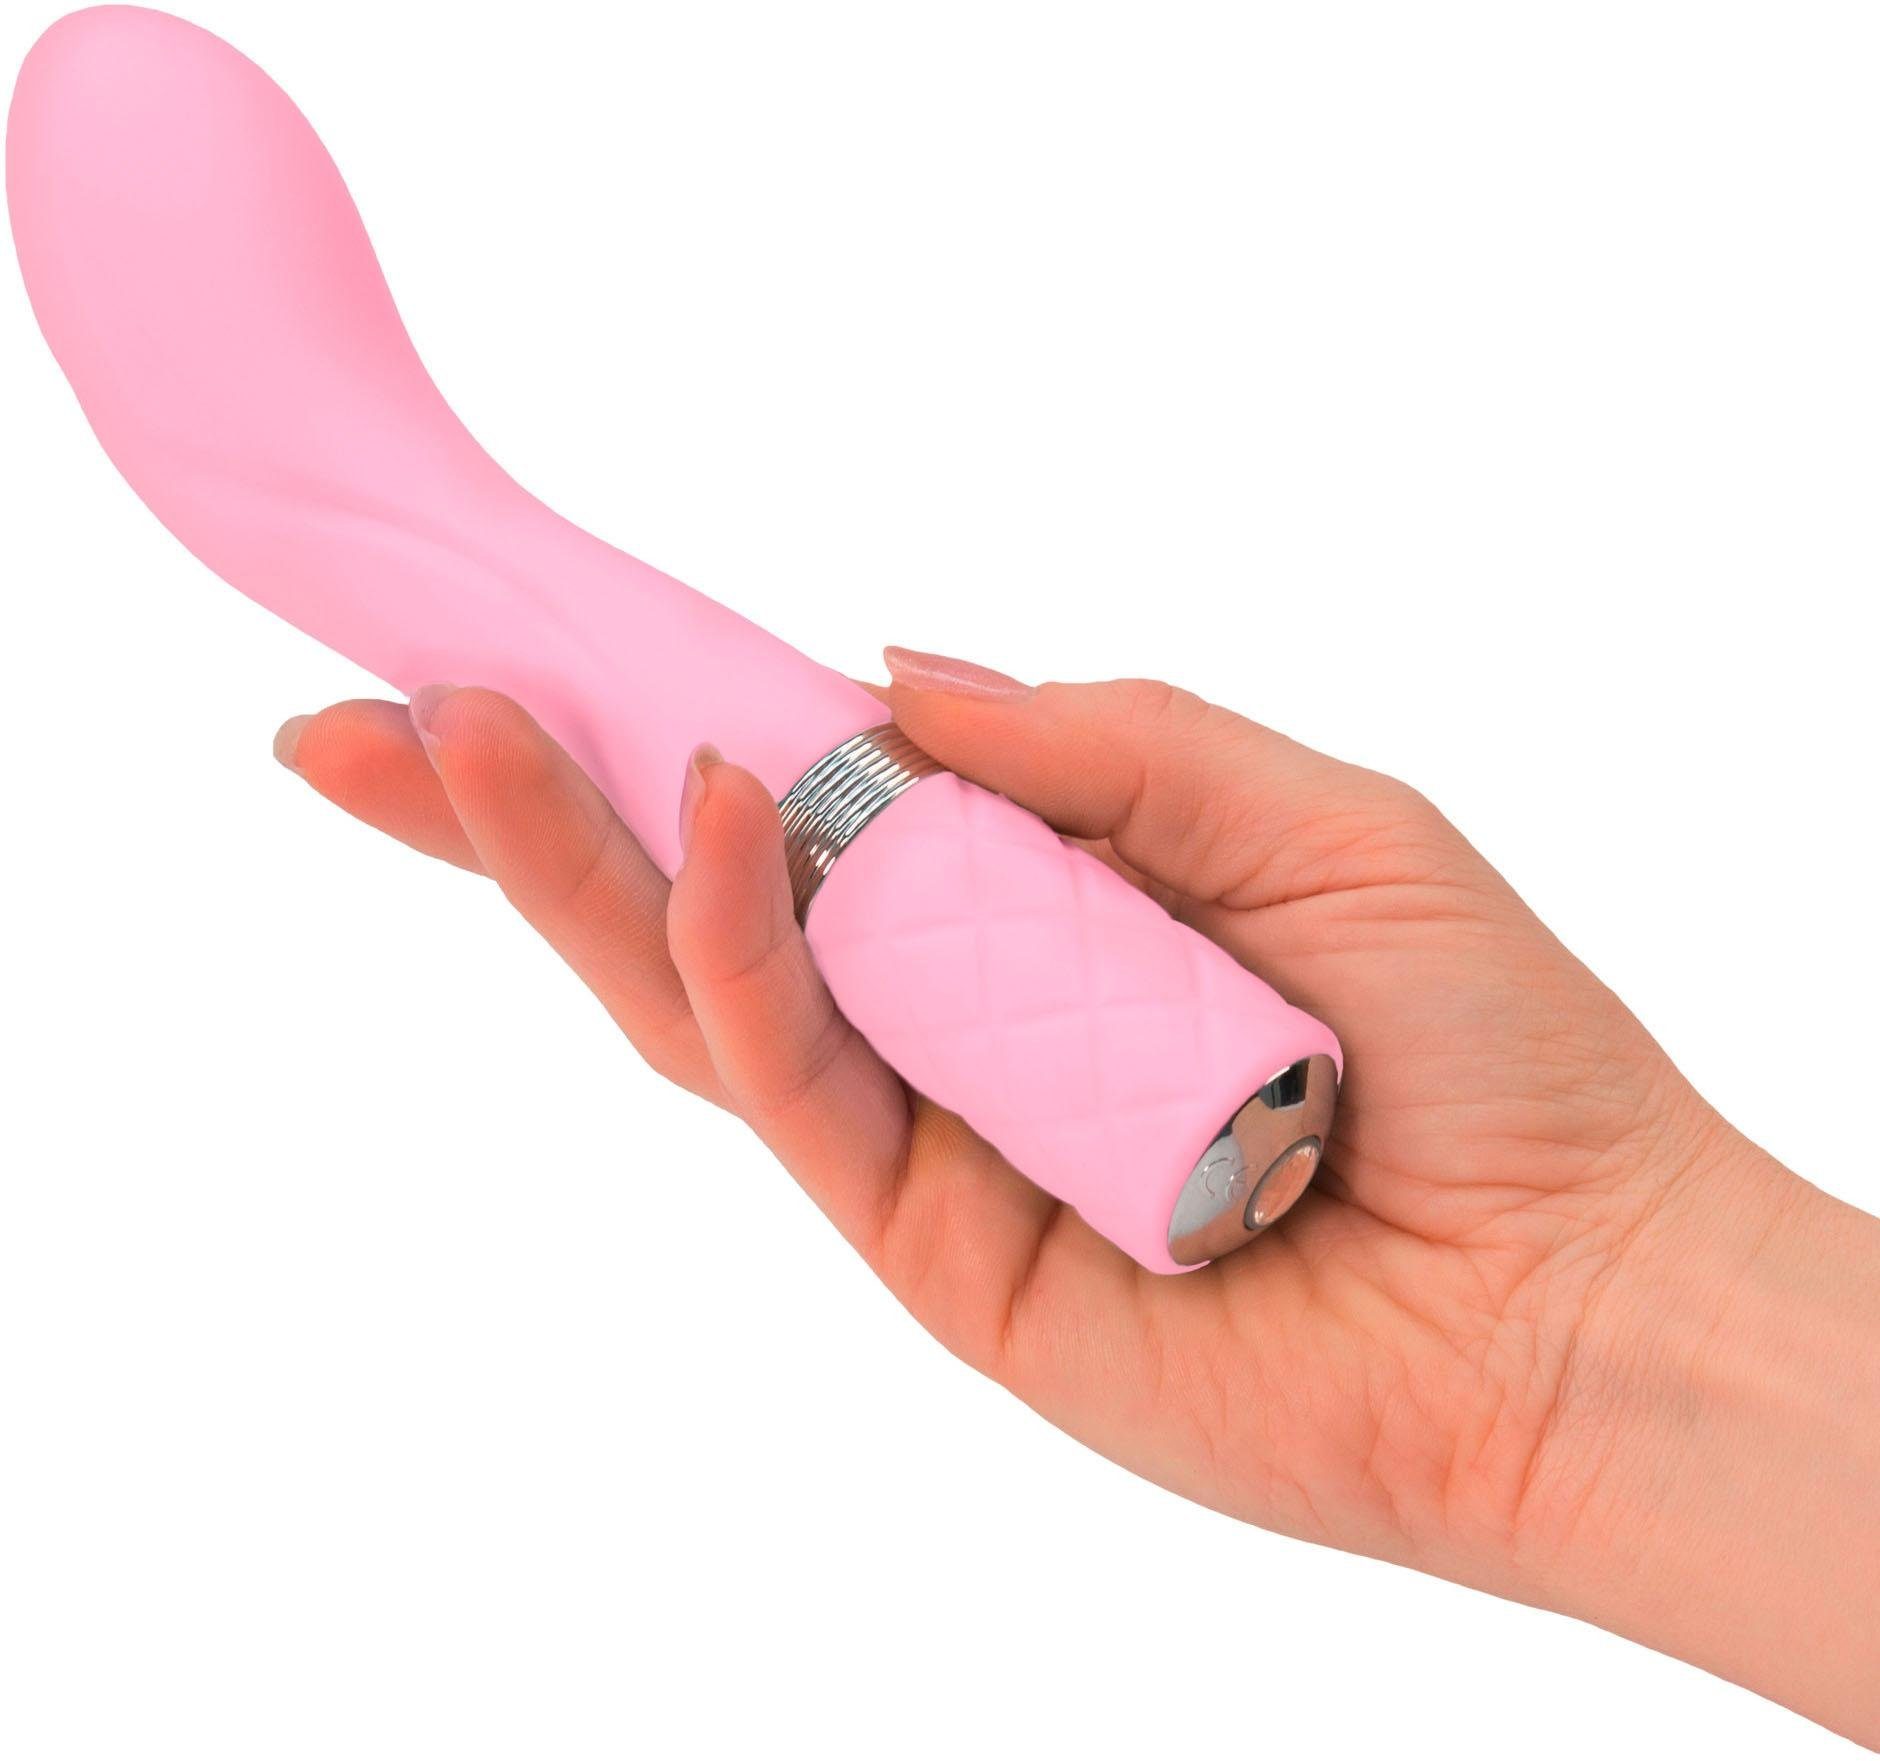 Pillow G-Punkt-Vibrator Sassy, pink stufenlose Talk Vibration Pillow